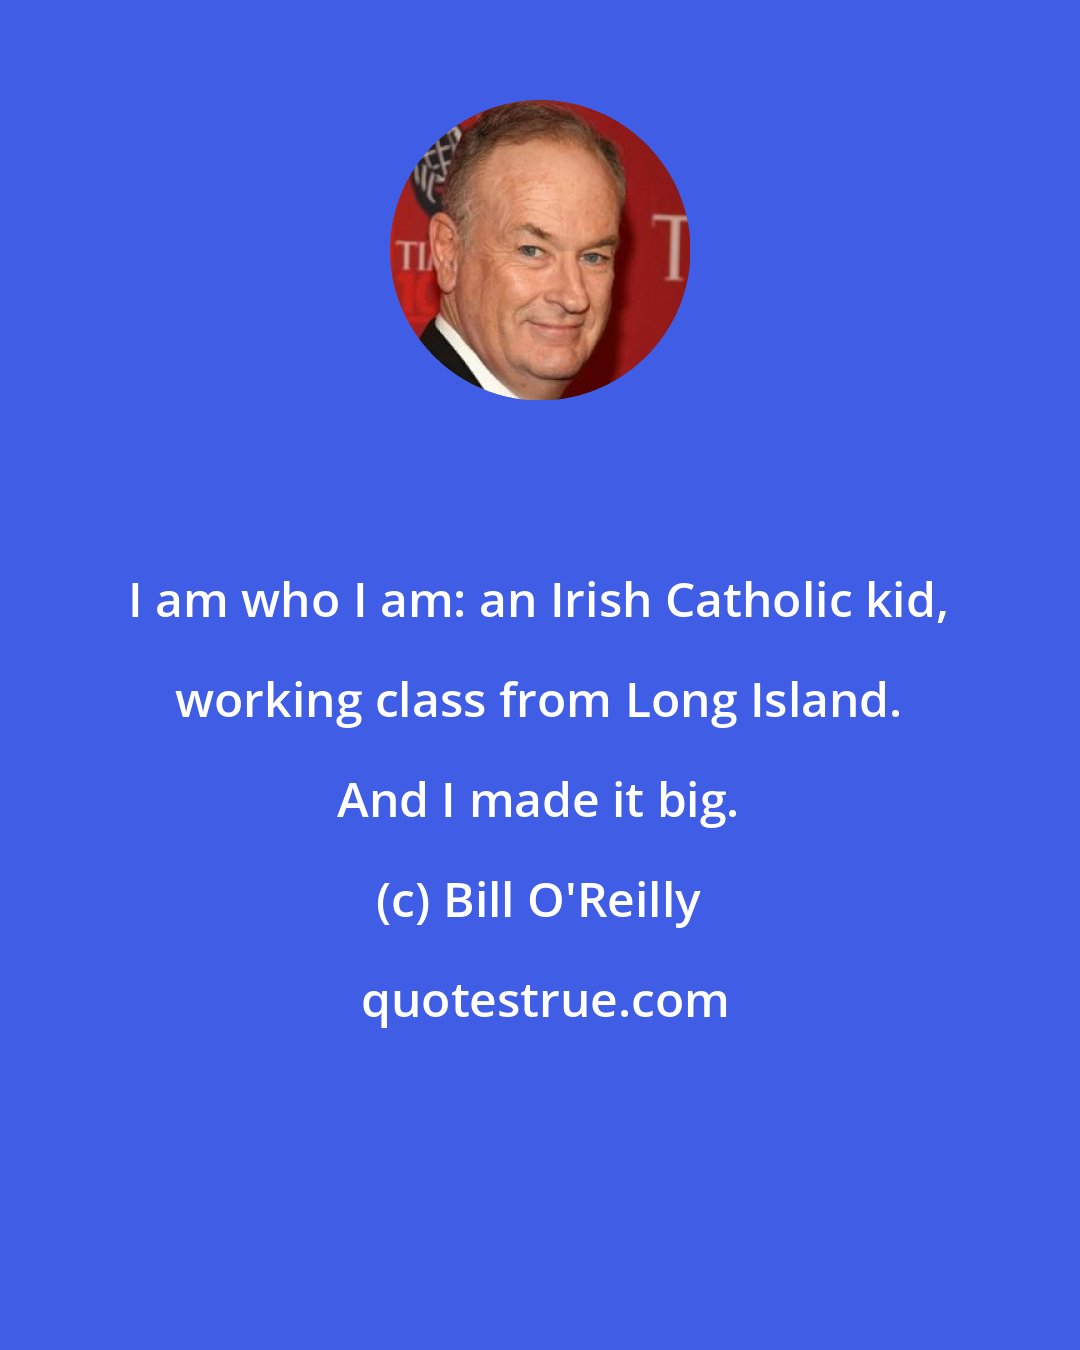 Bill O'Reilly: I am who I am: an Irish Catholic kid, working class from Long Island. And I made it big.